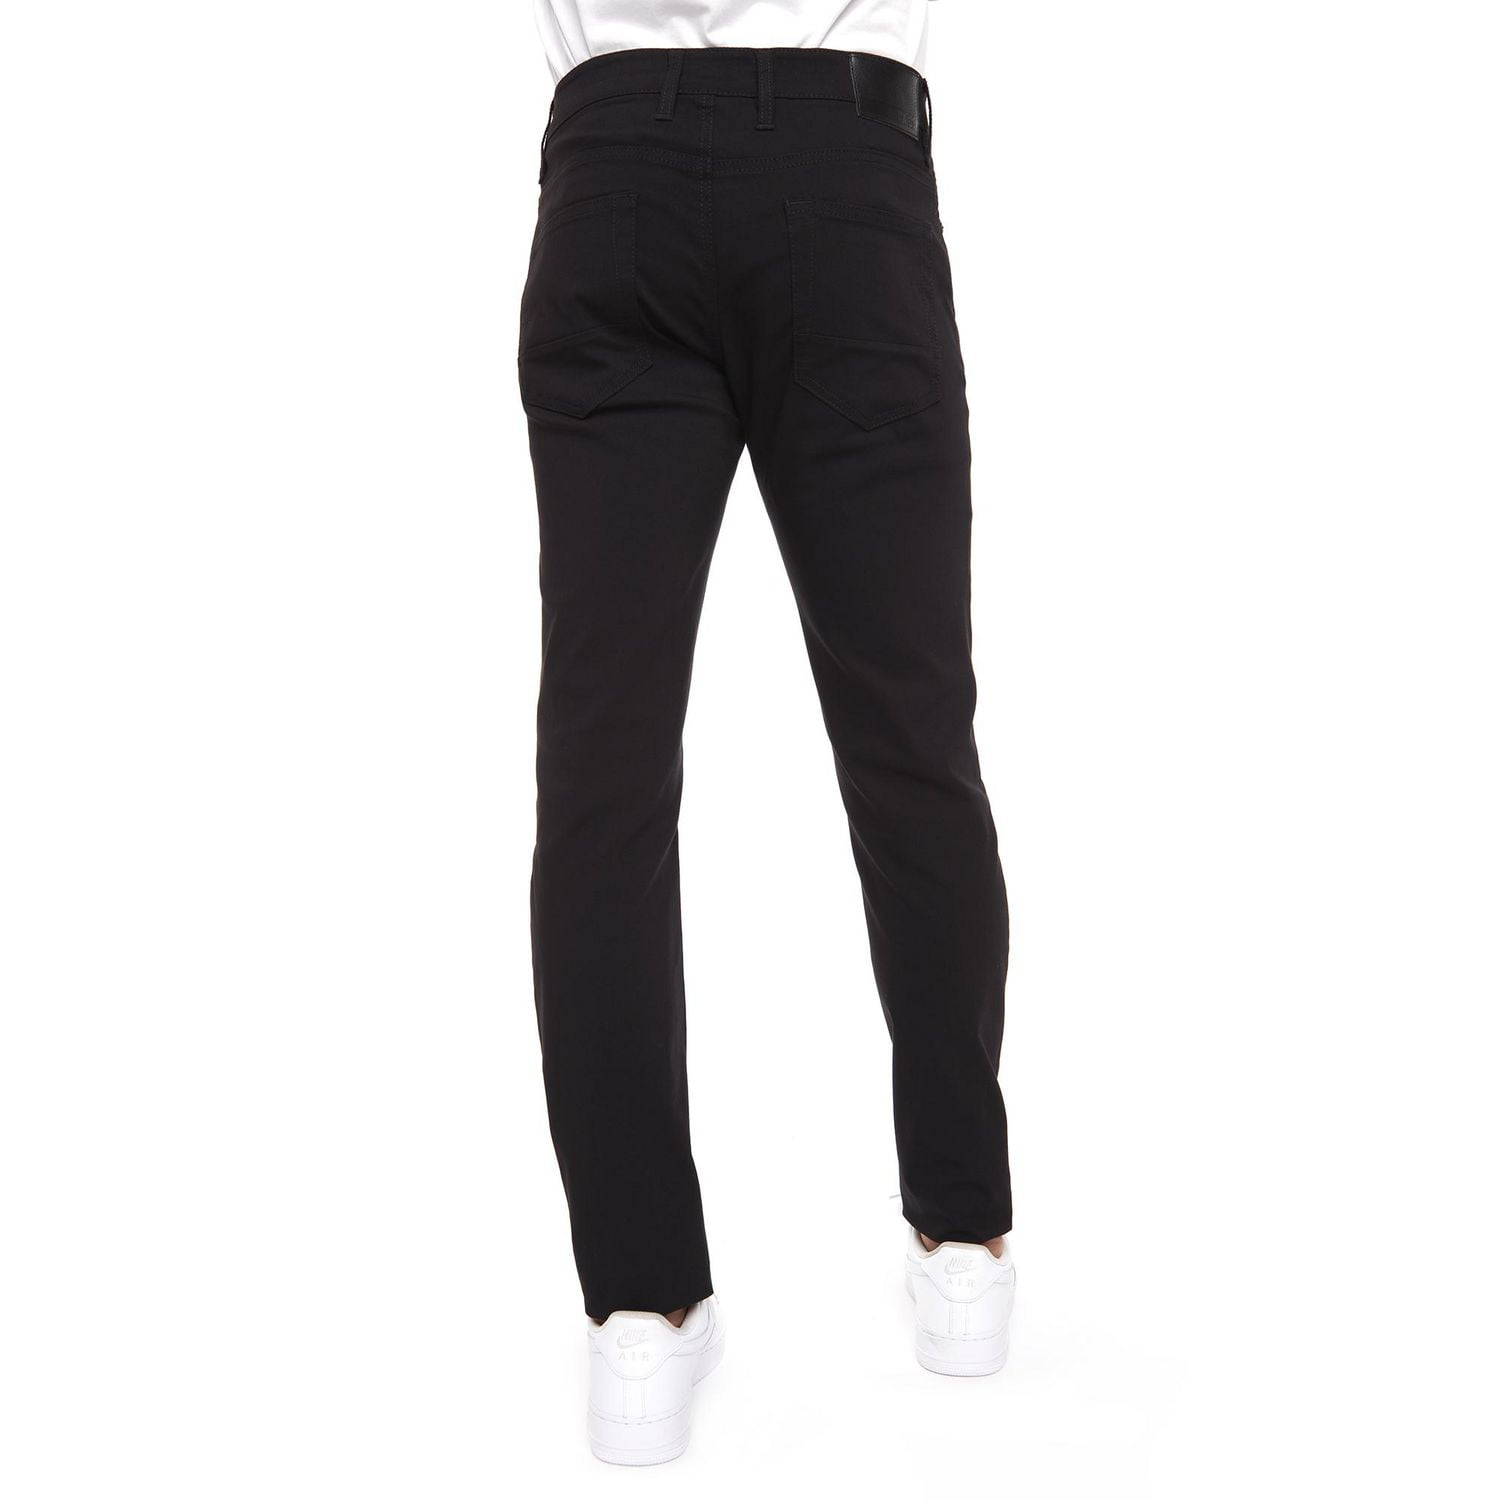 36 Wholesale Men's 5-Pocket UltrA-Stretch Skinny Fit Chino Pants Black